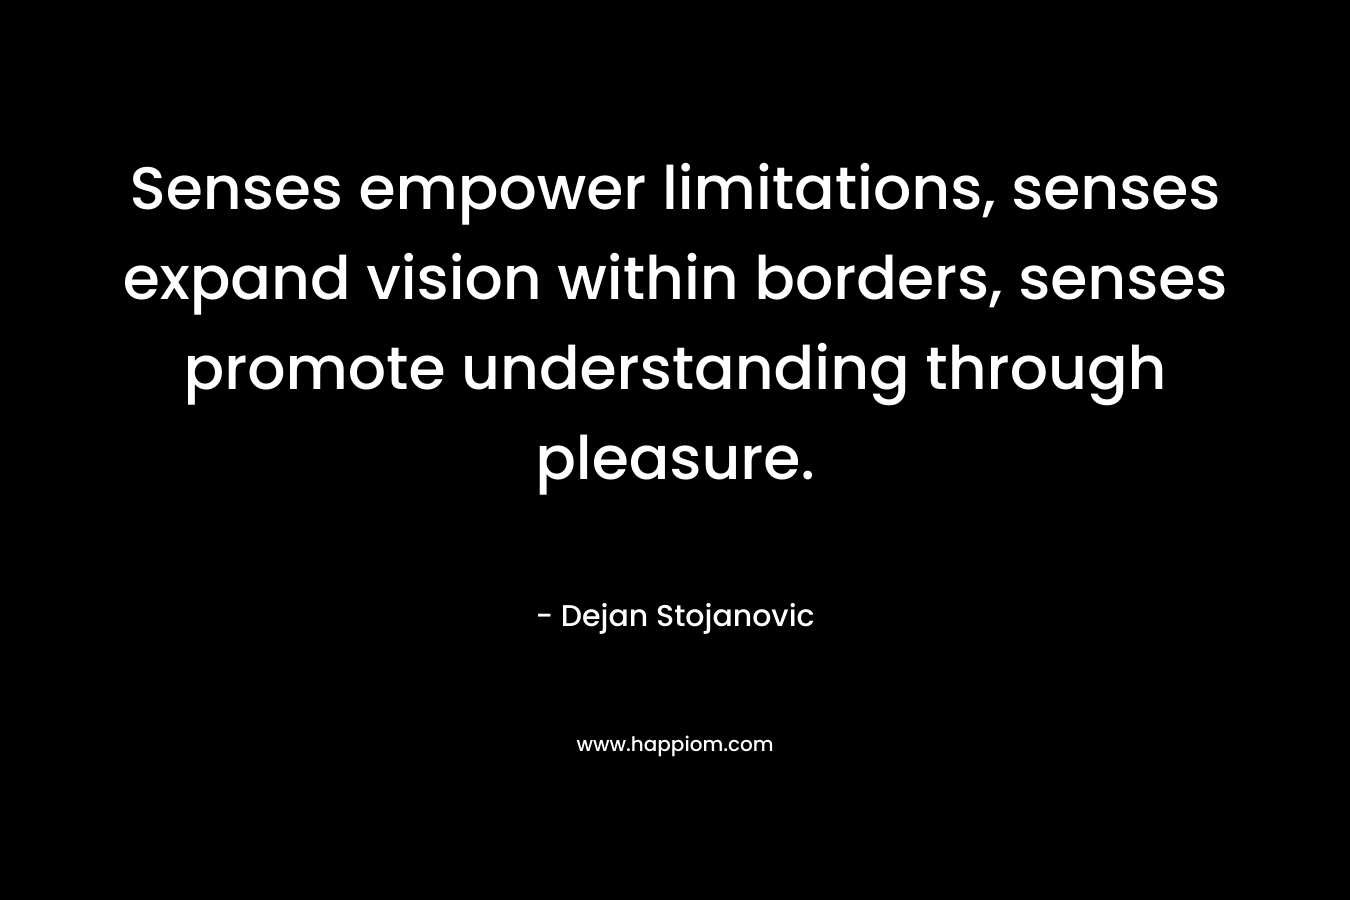 Senses empower limitations, senses expand vision within borders, senses promote understanding through pleasure.